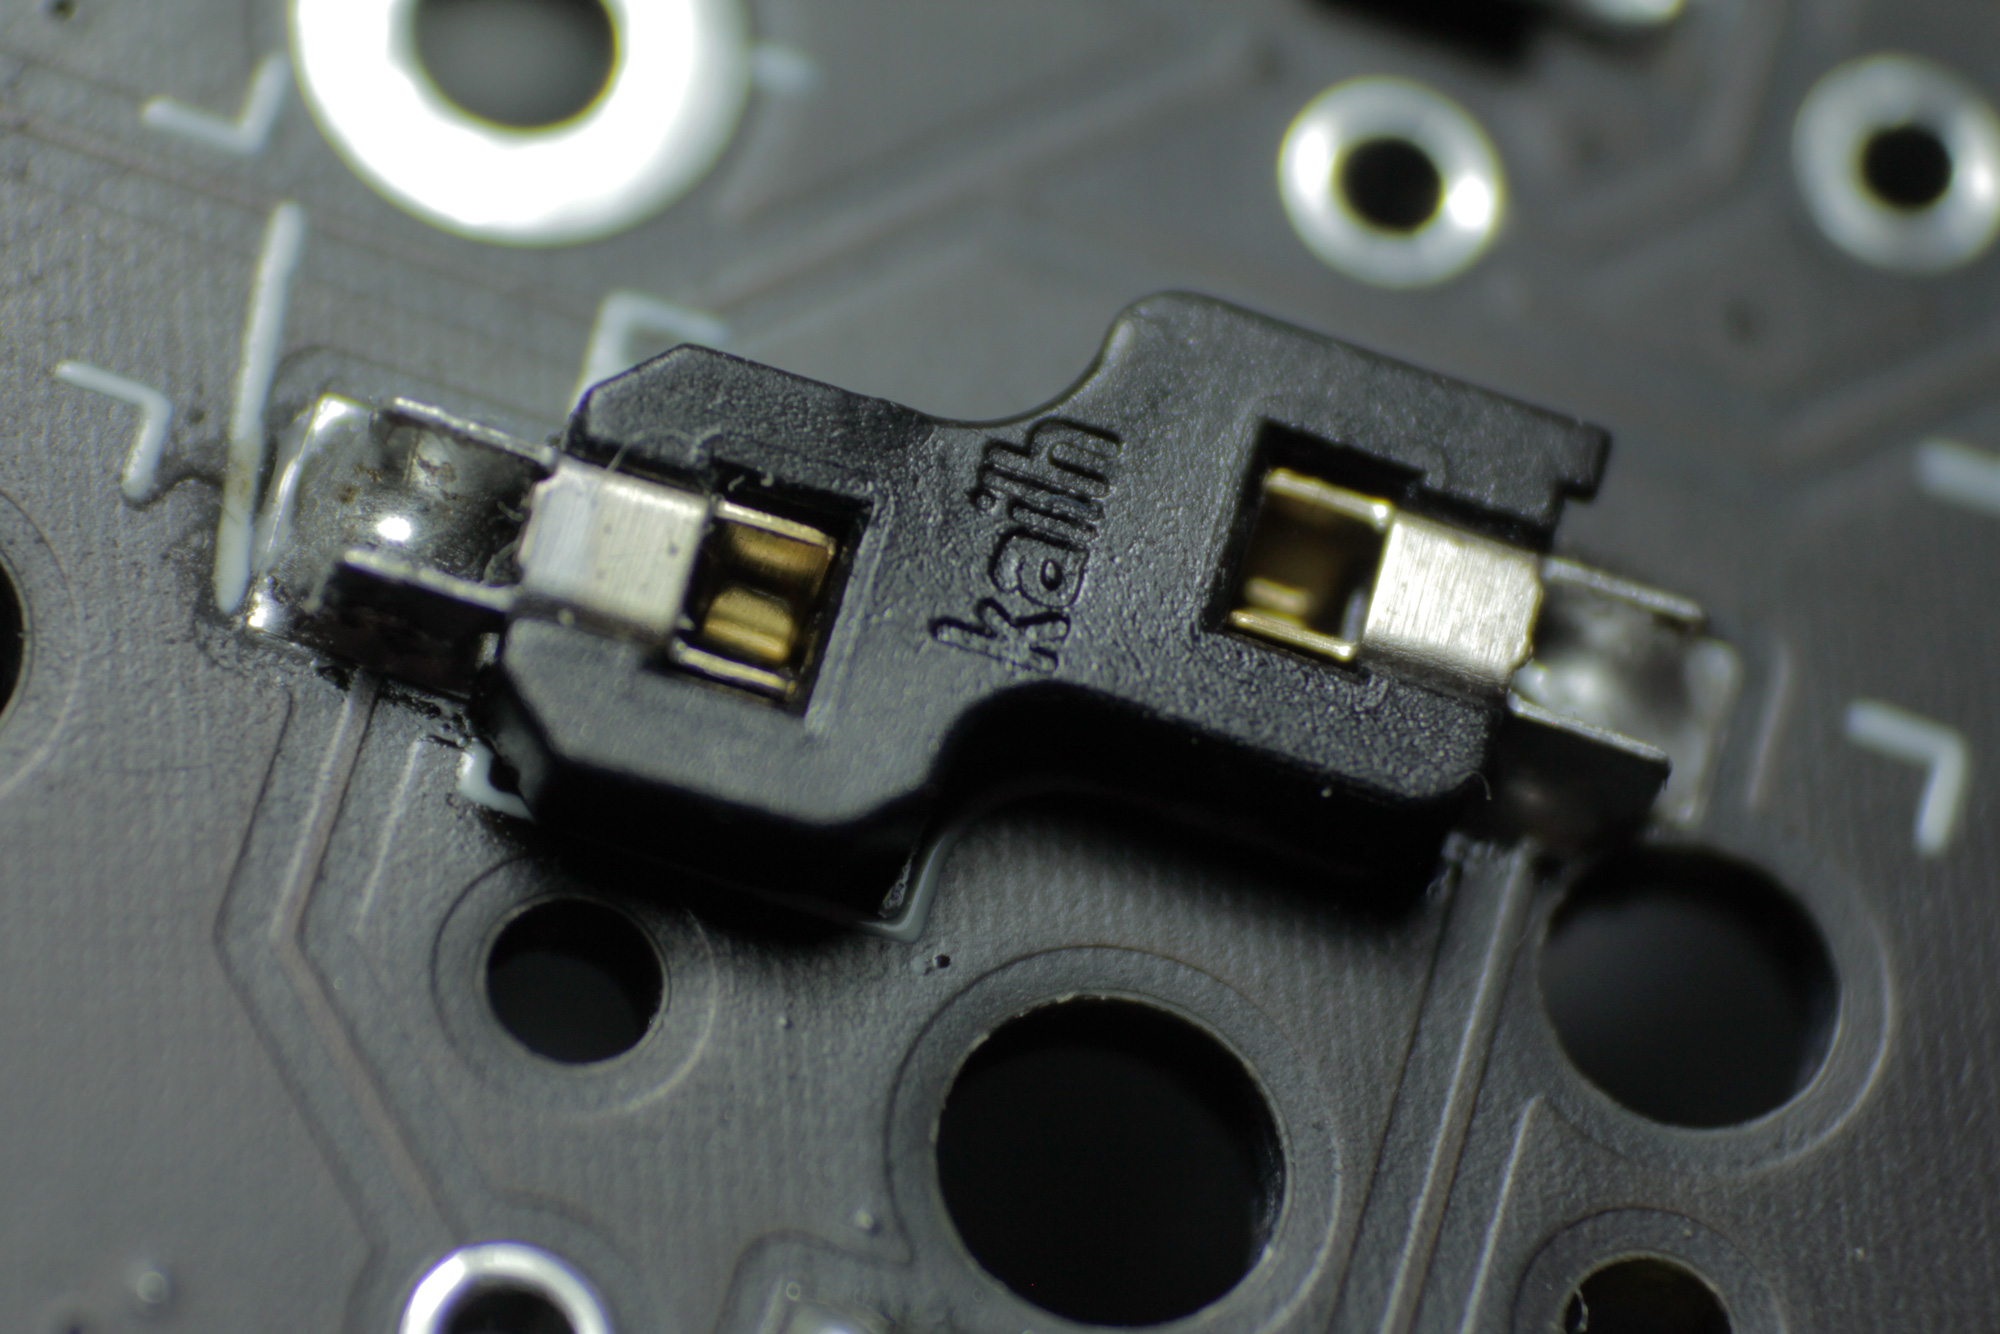 switch socket
soldered